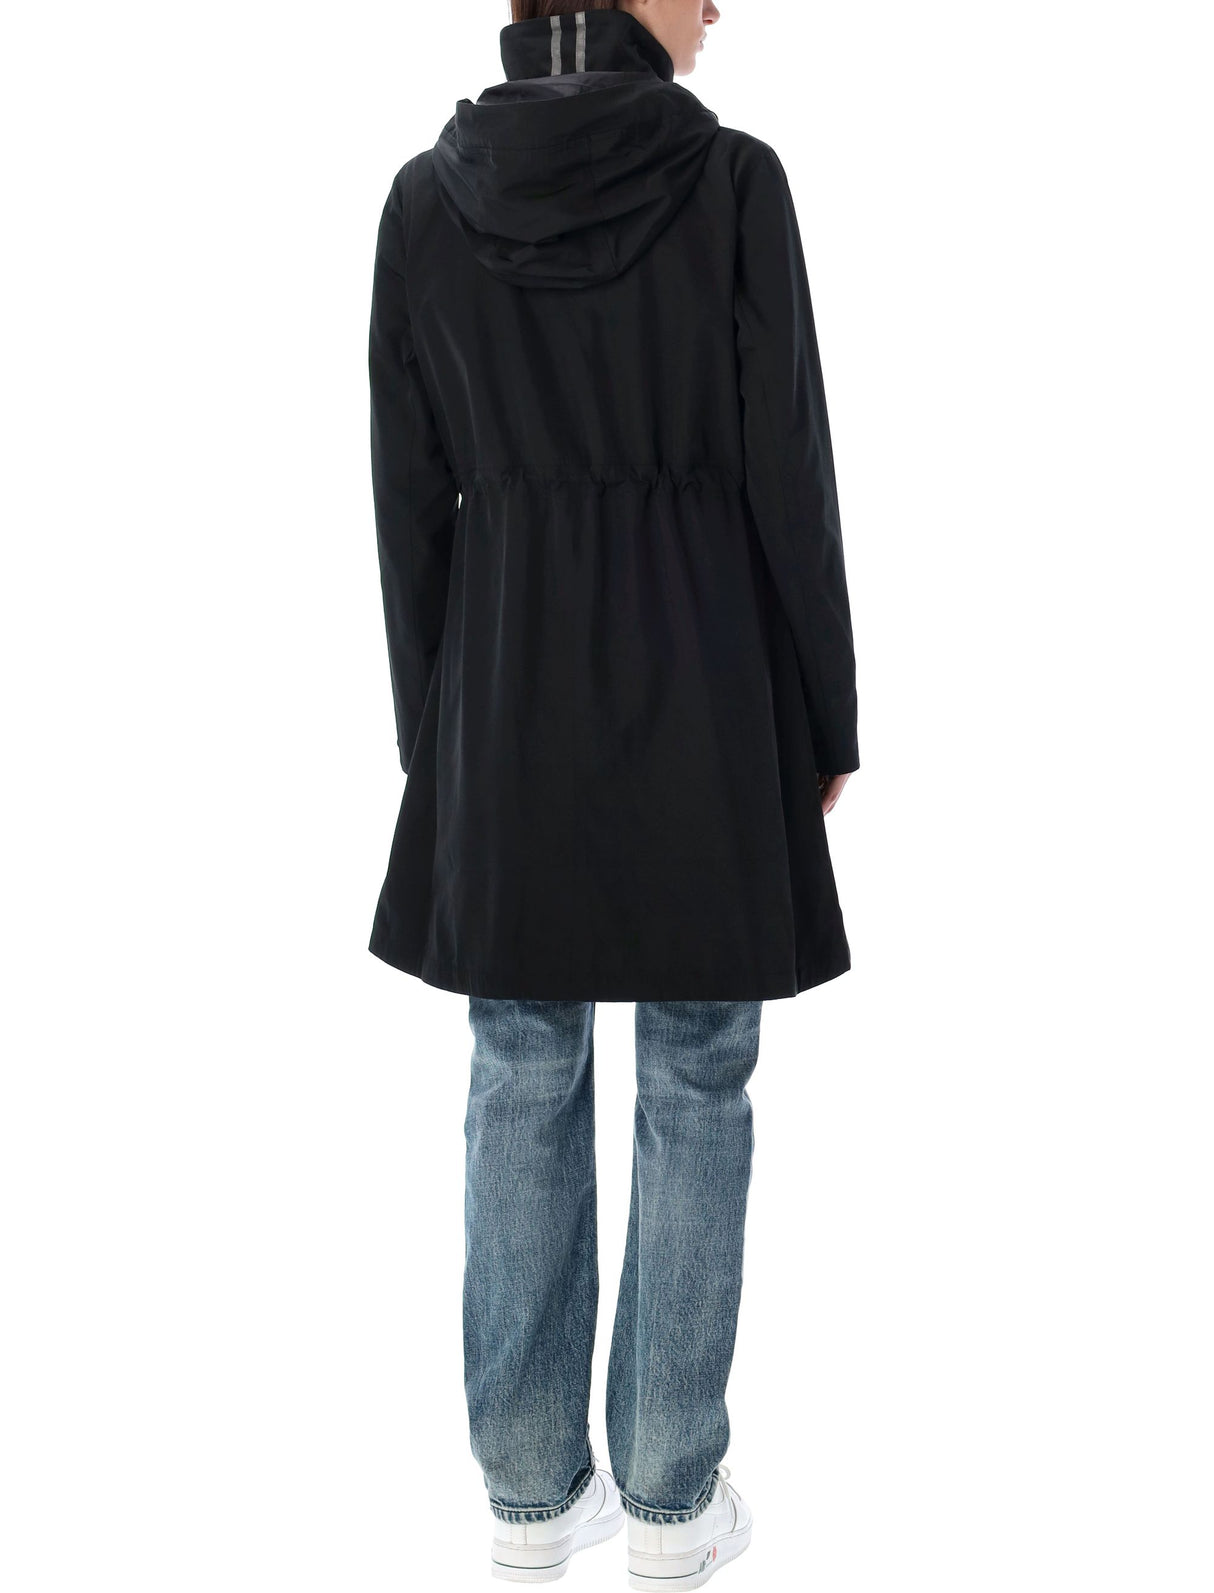 CANADA GOOSE Black belcarra jacket with adjustable hood and reflective details